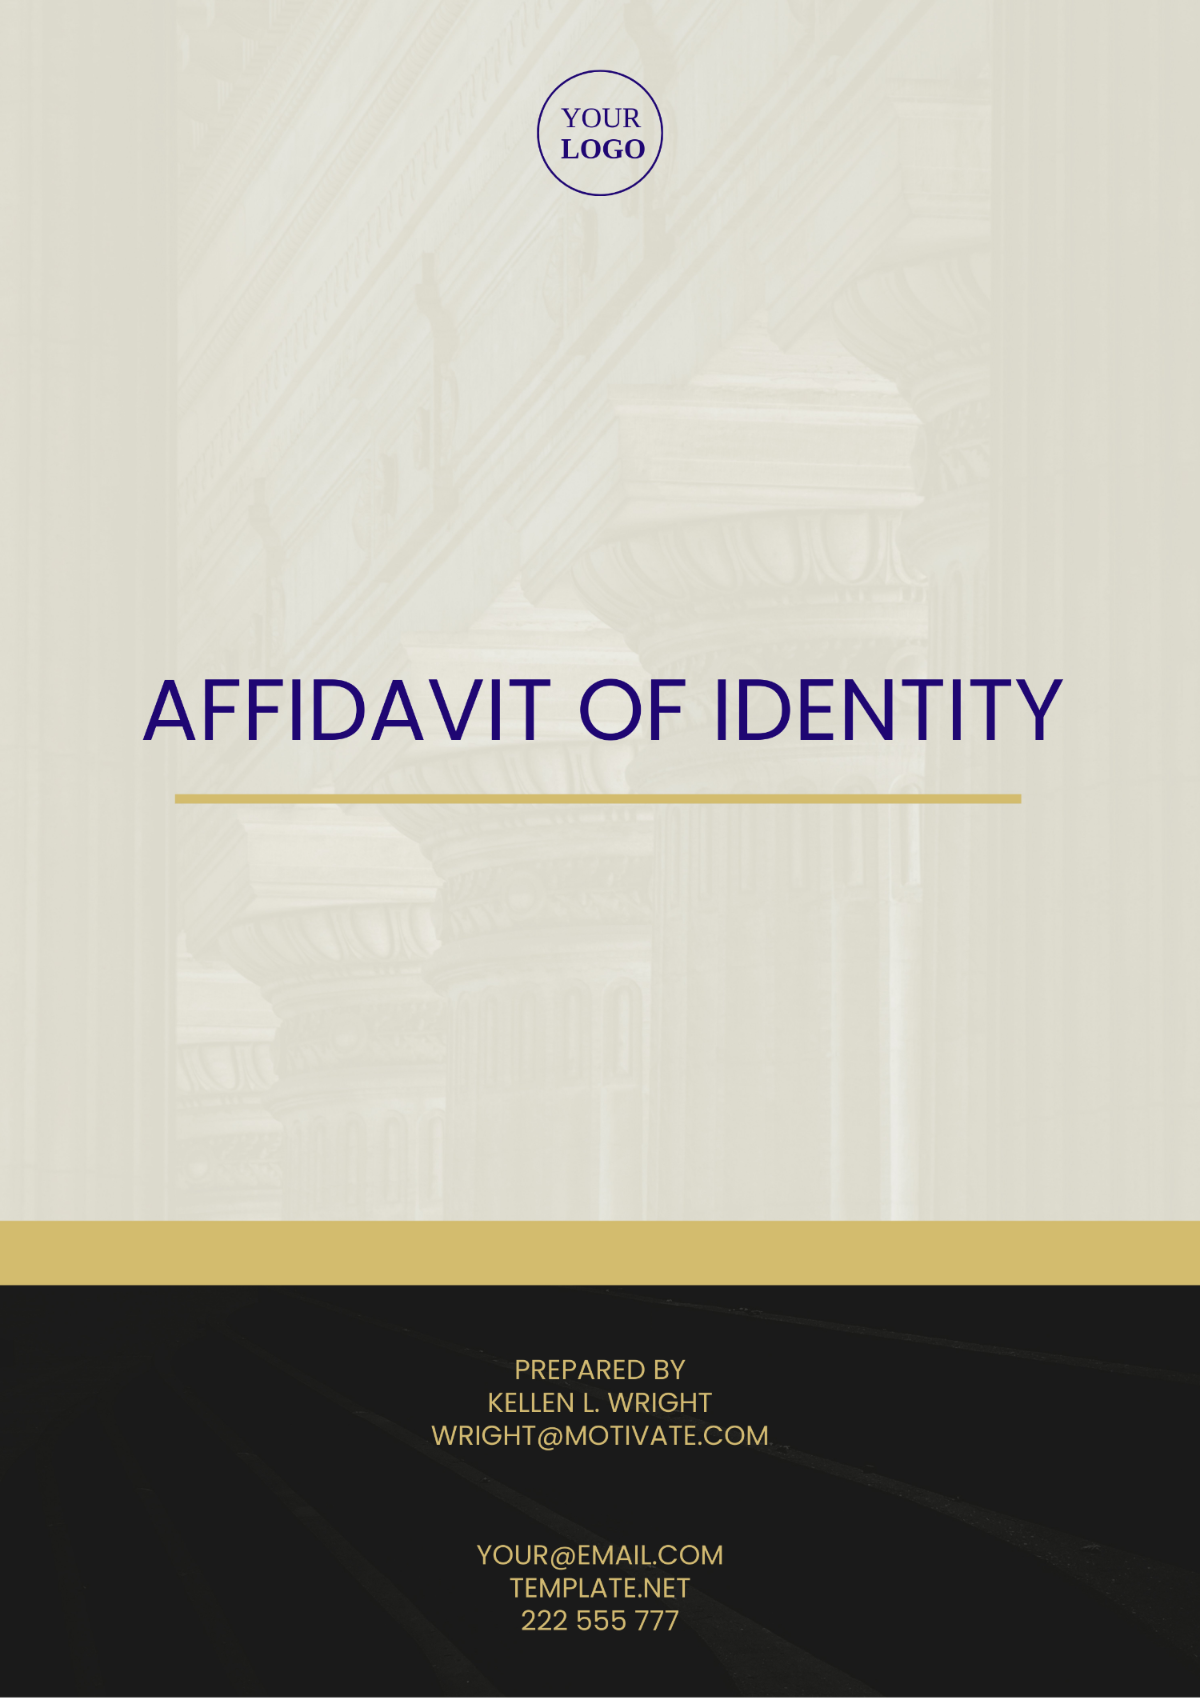 Virginia Affidavit of Identity Template